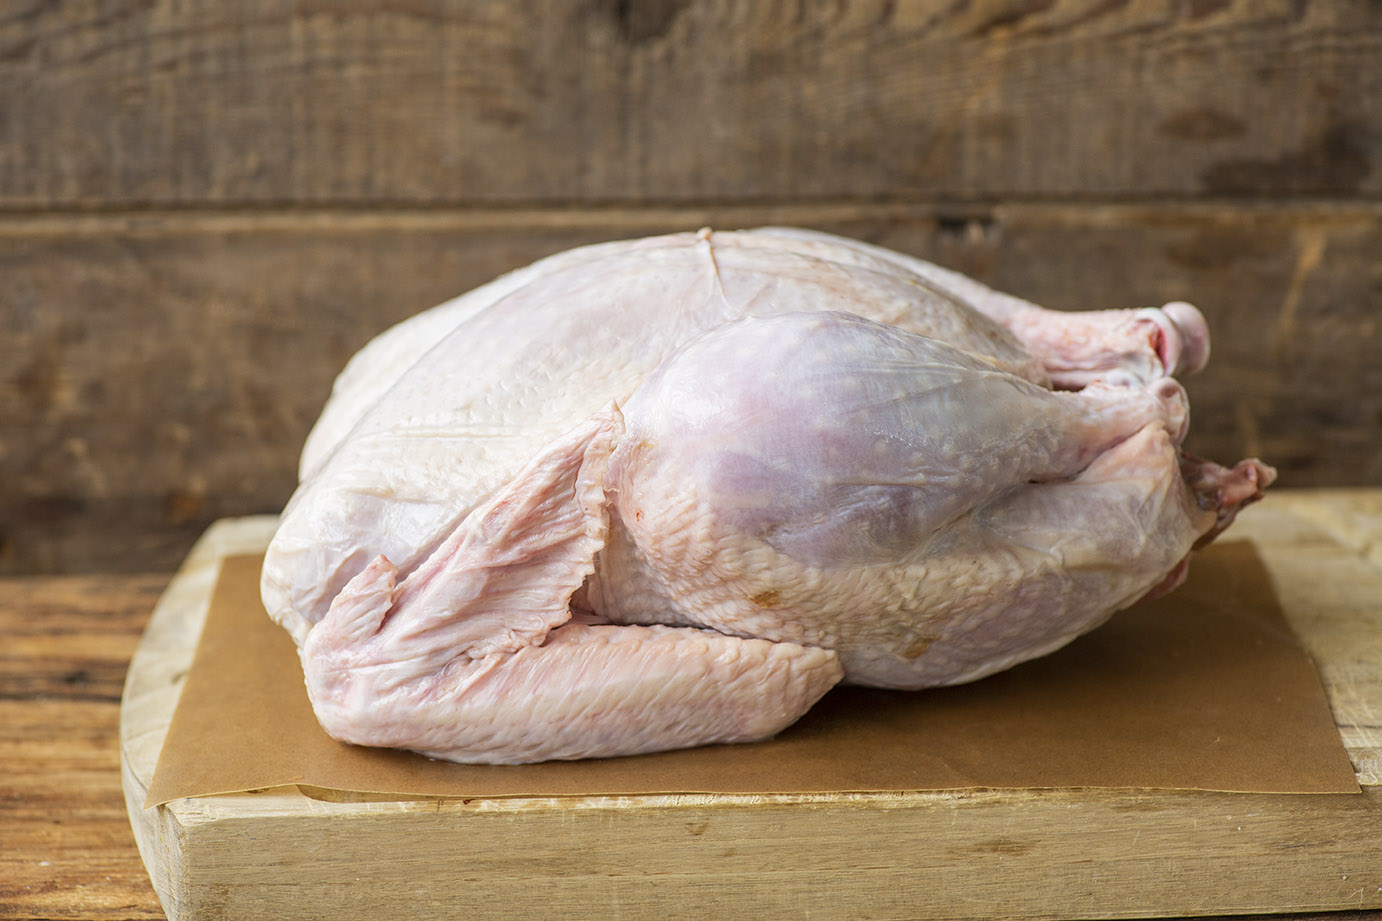 Whole Turkey (frozen) 4.50 per pound